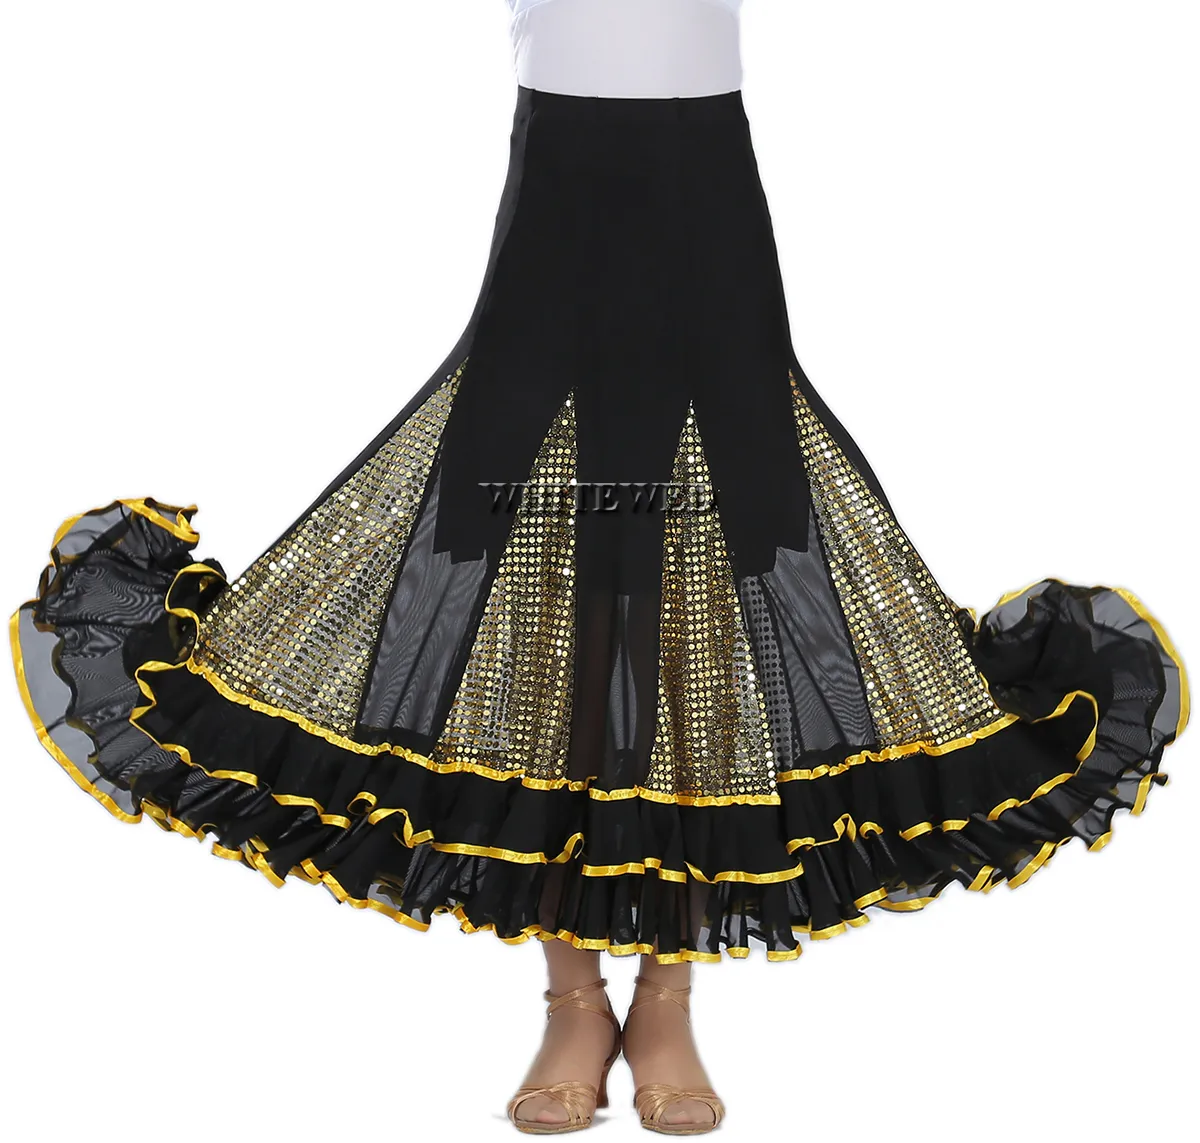 Whitewed Quickstep Folklorico Ballroom Jive Practice Skirt Waltz Dance Ruffle Glitter Long Latin Waltz Ballroom Dance Circle Tango Costumes